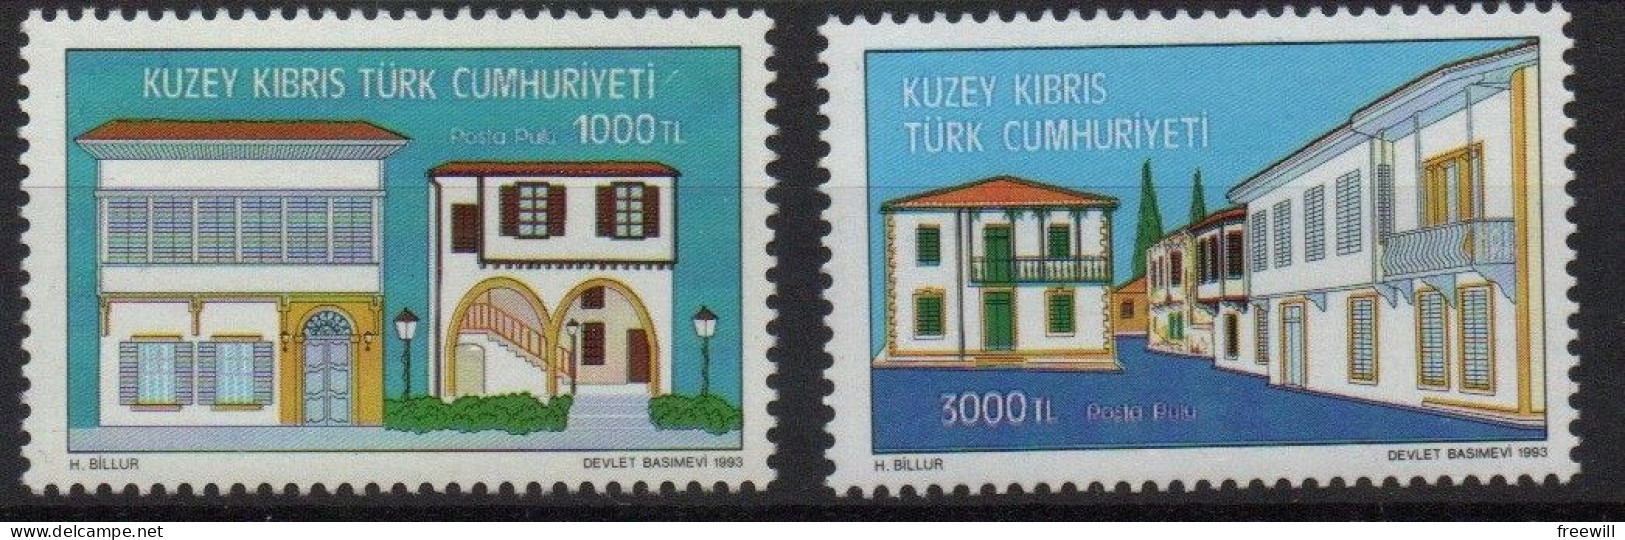 Chypre turque -Turkish Cyprus  Timbres divers - Various stamps -Verschillende postzegels XXX